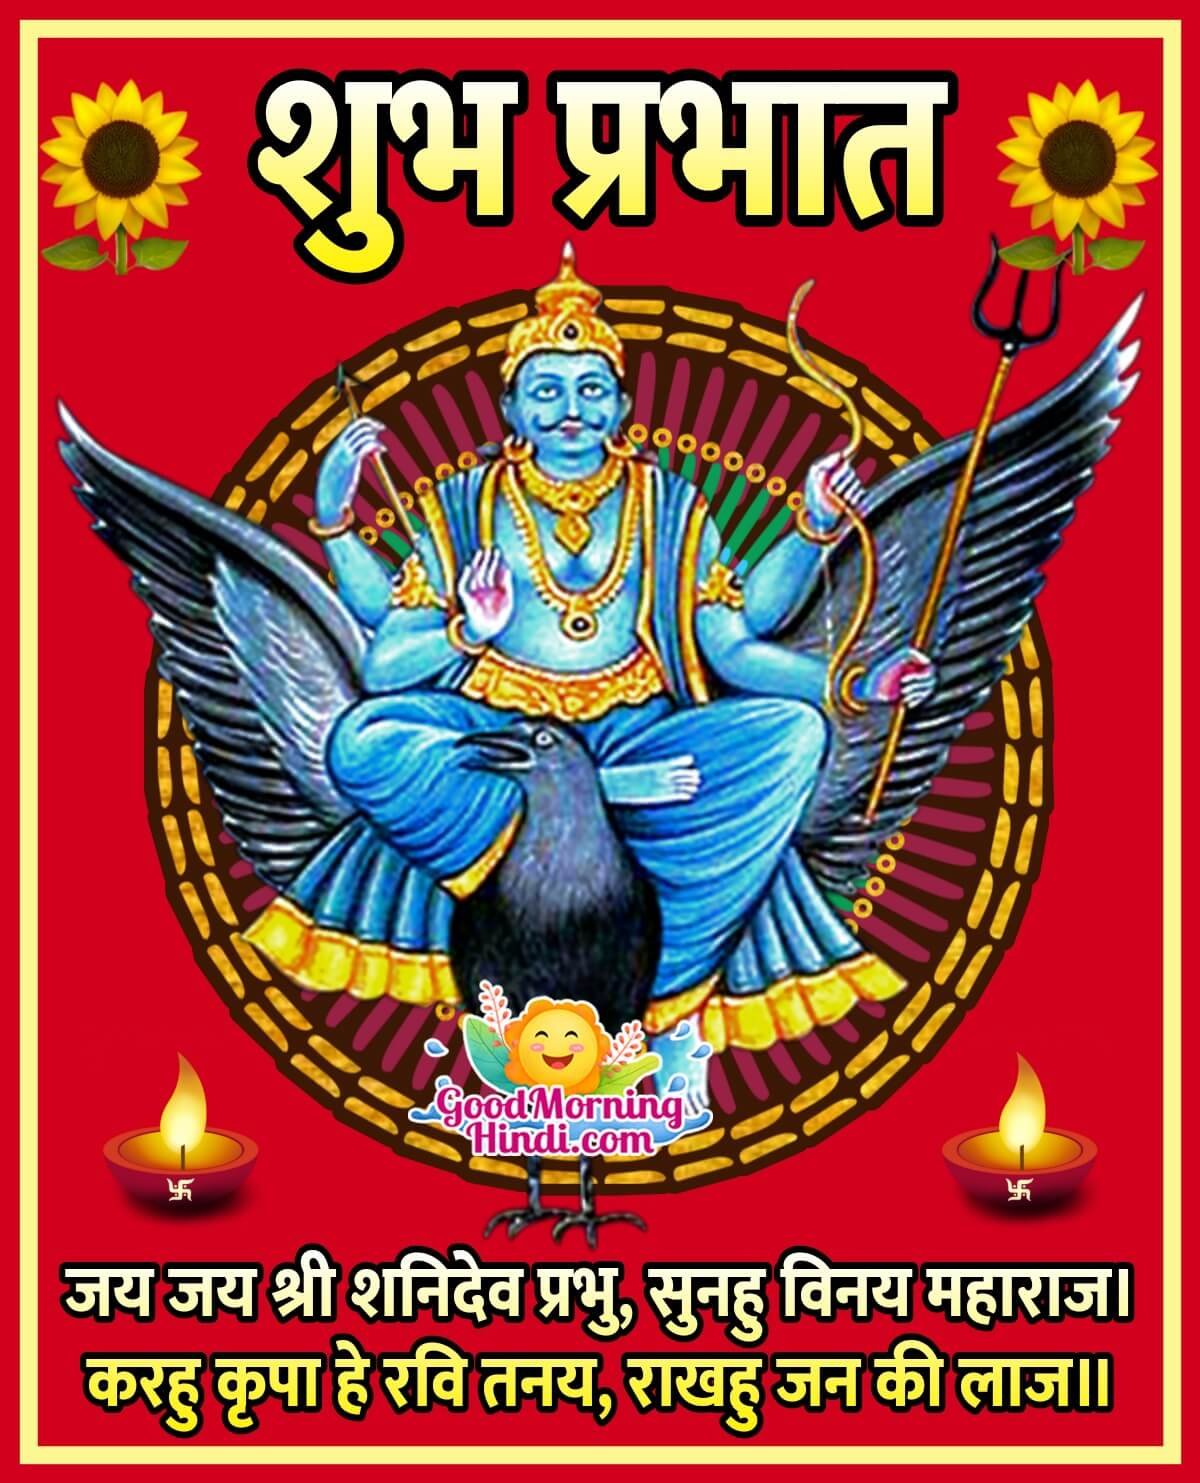 Good Morning Hindi Religious Good Morning Wishes Images In Hindi